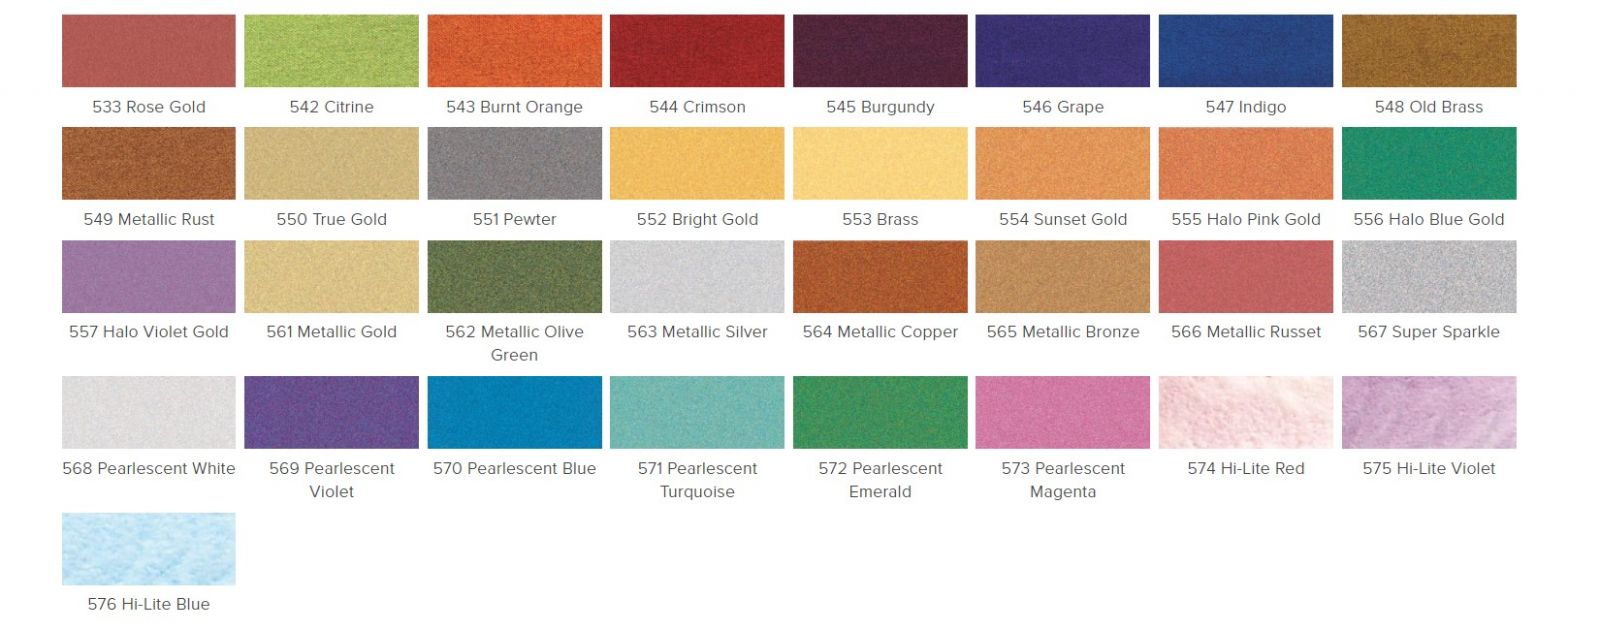 547 Metallic Indigo Jacquard Fabric Paint - Metallic Paint - Dye